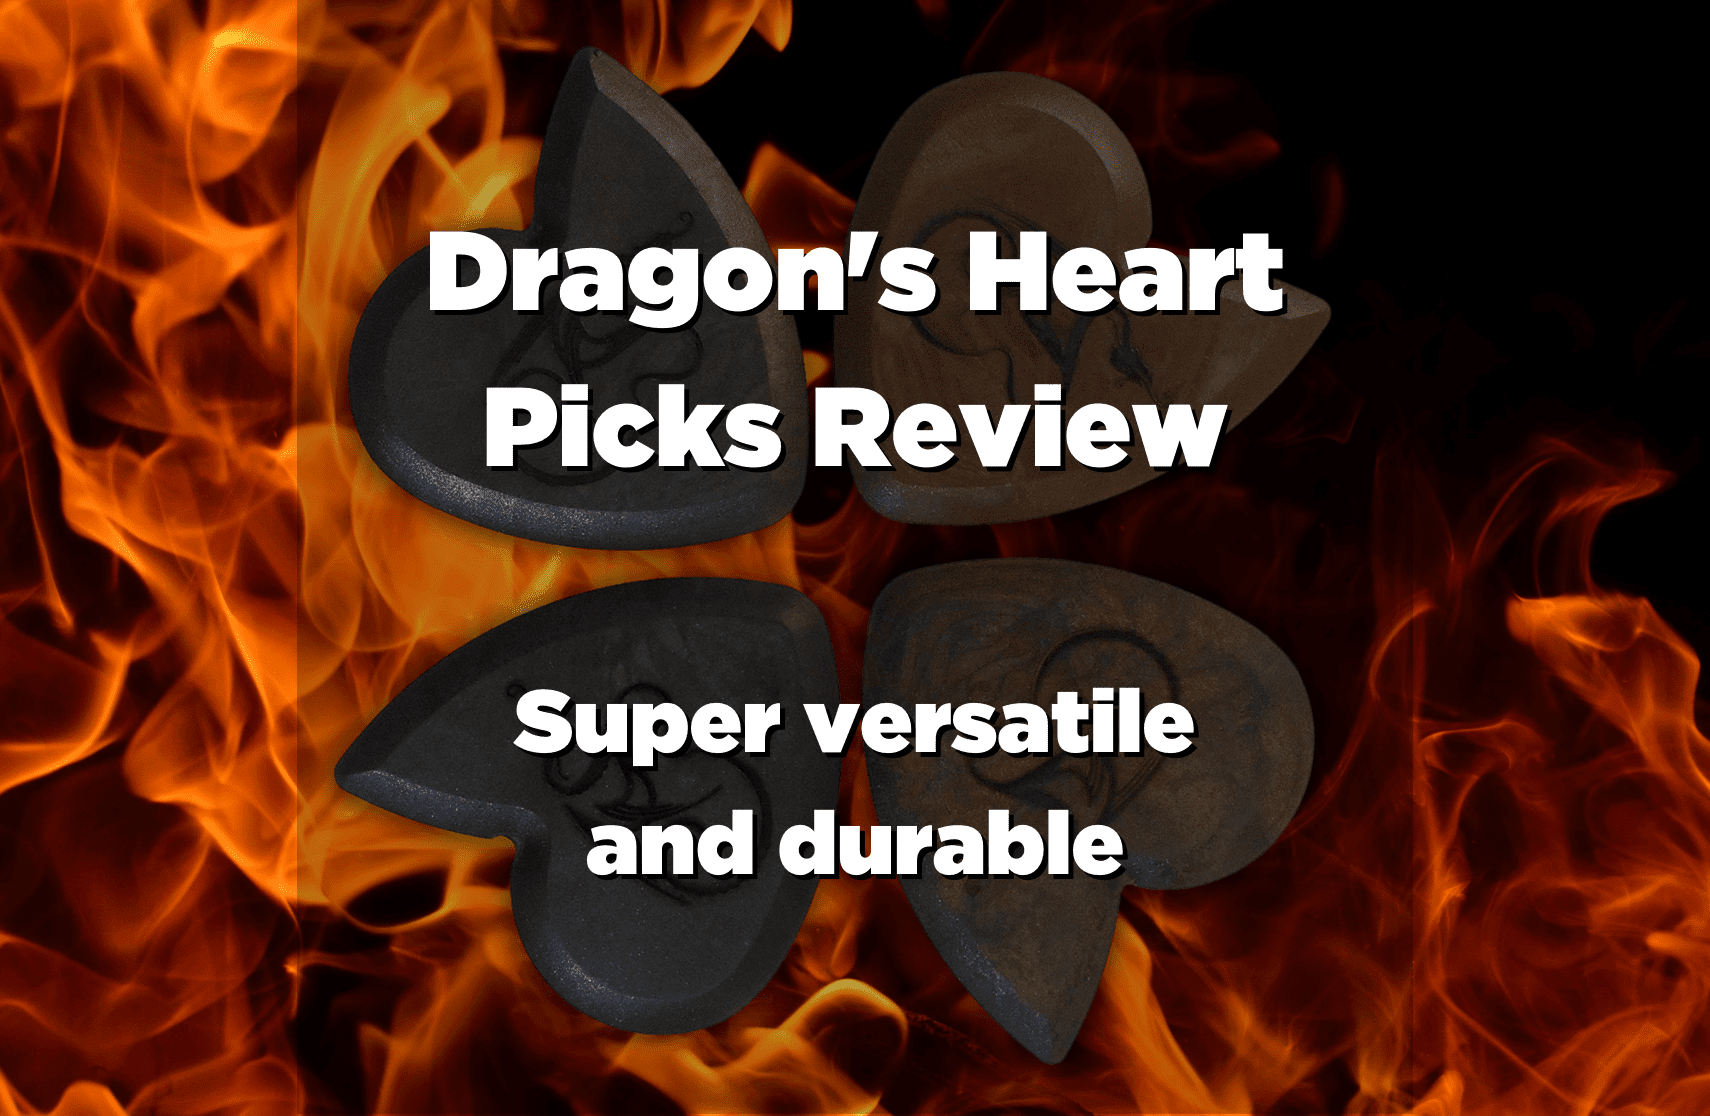 https://guitarpickreviews.com/wp-content/uploads/2021/11/Dragons-Heart-Picks-Review.png